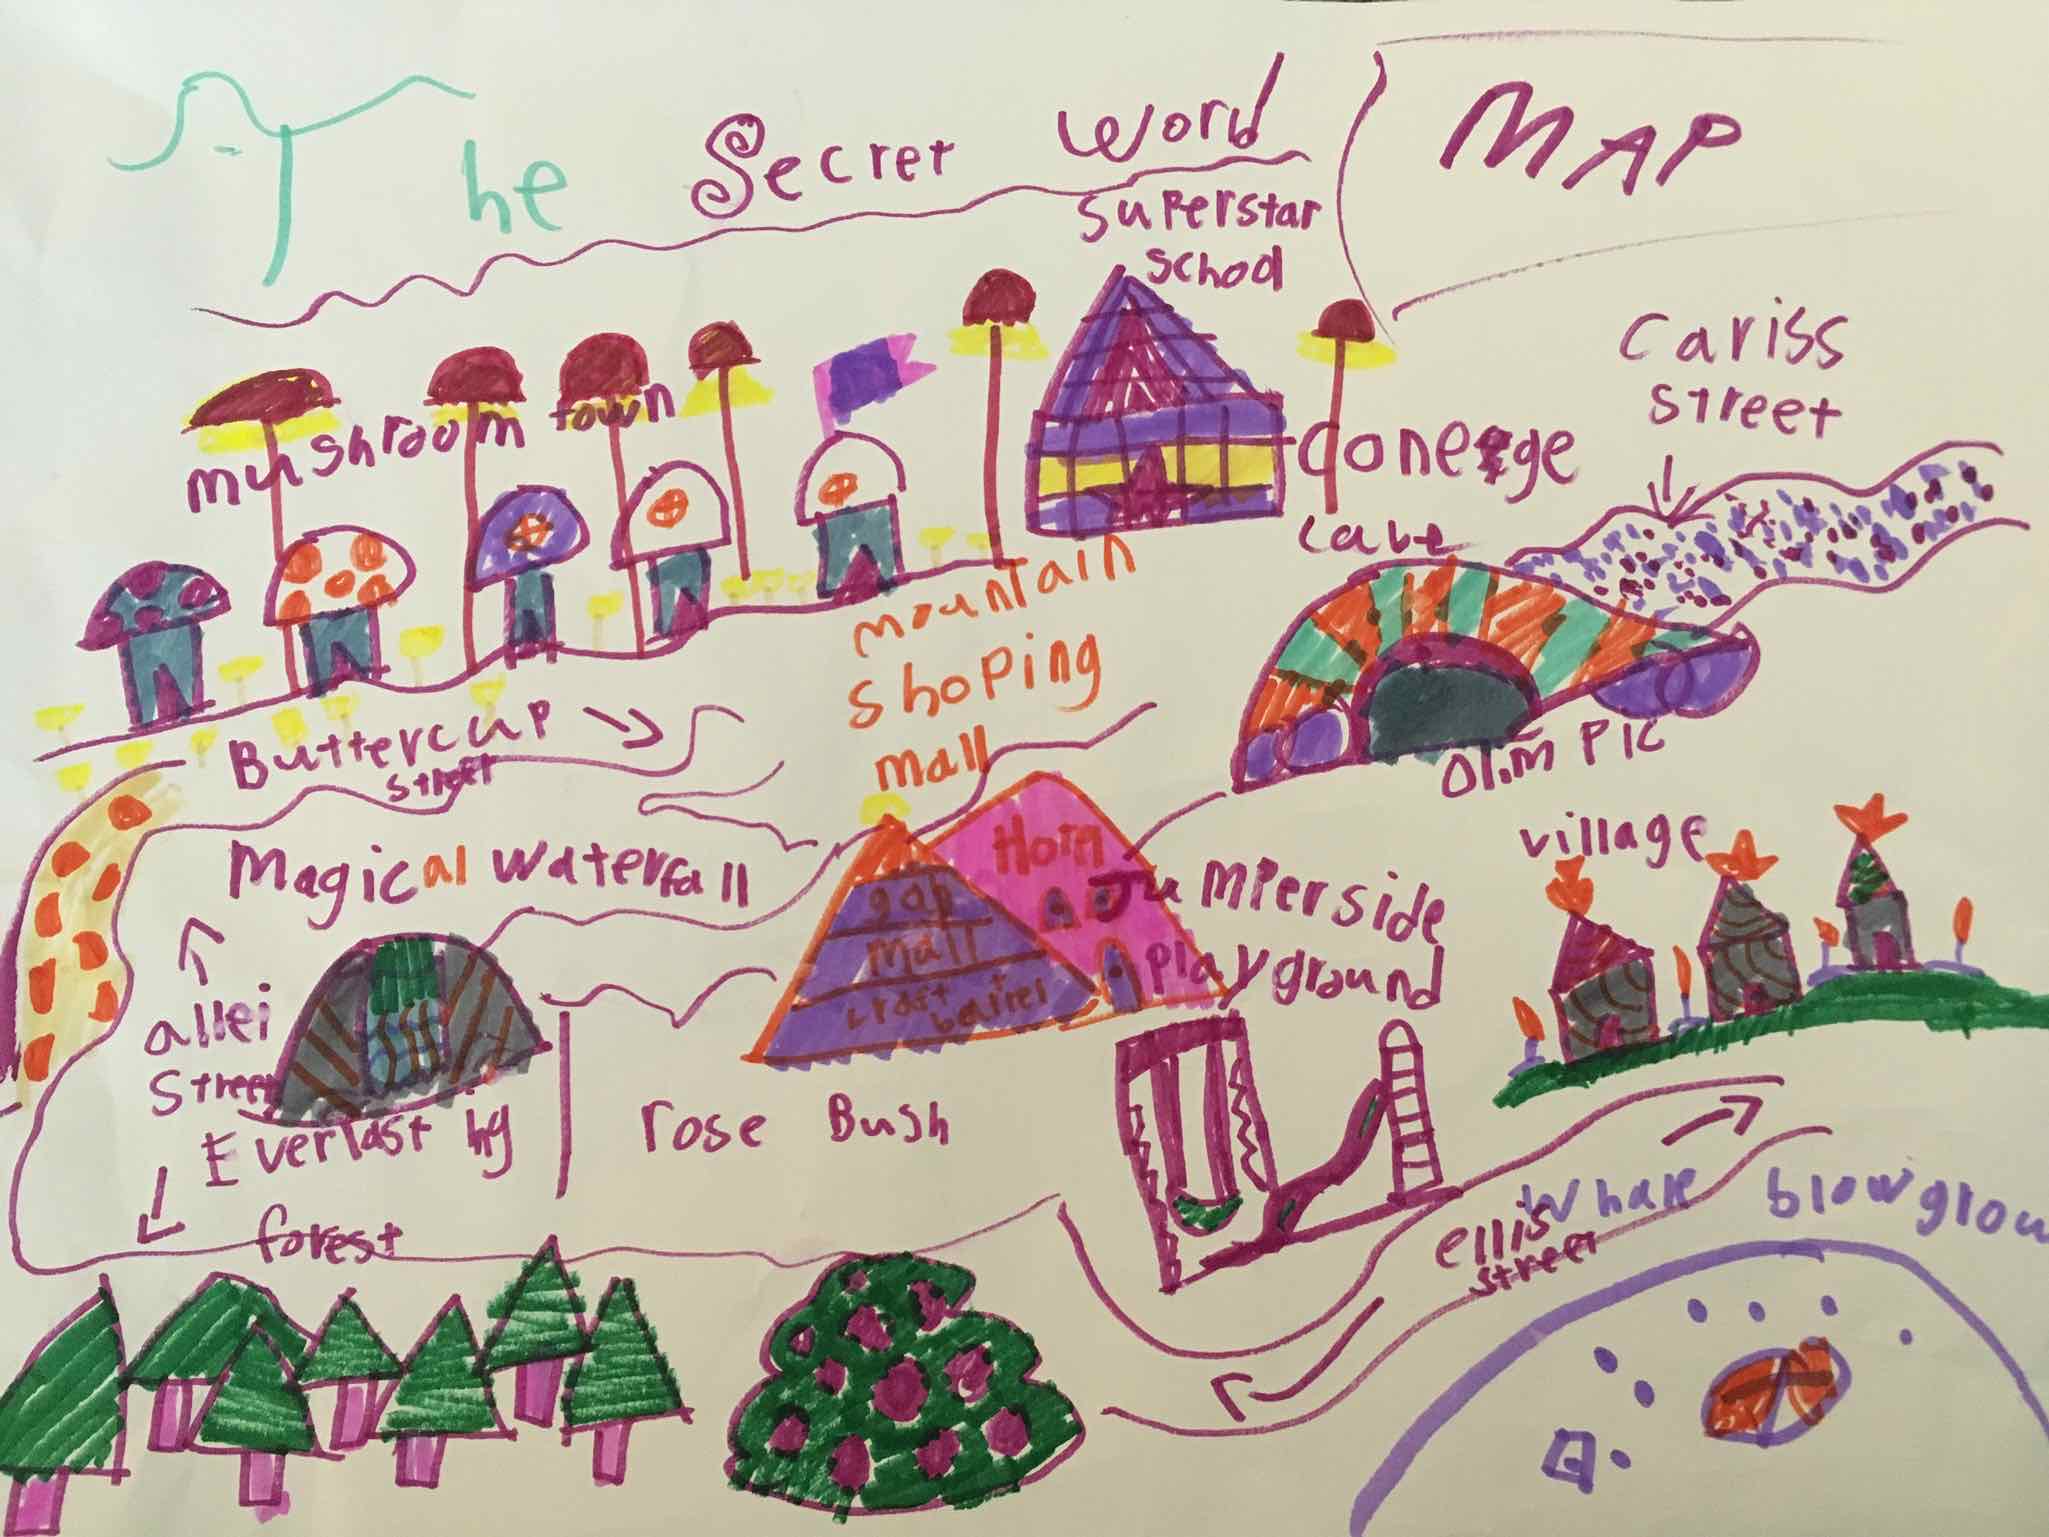 The Secret World (map)